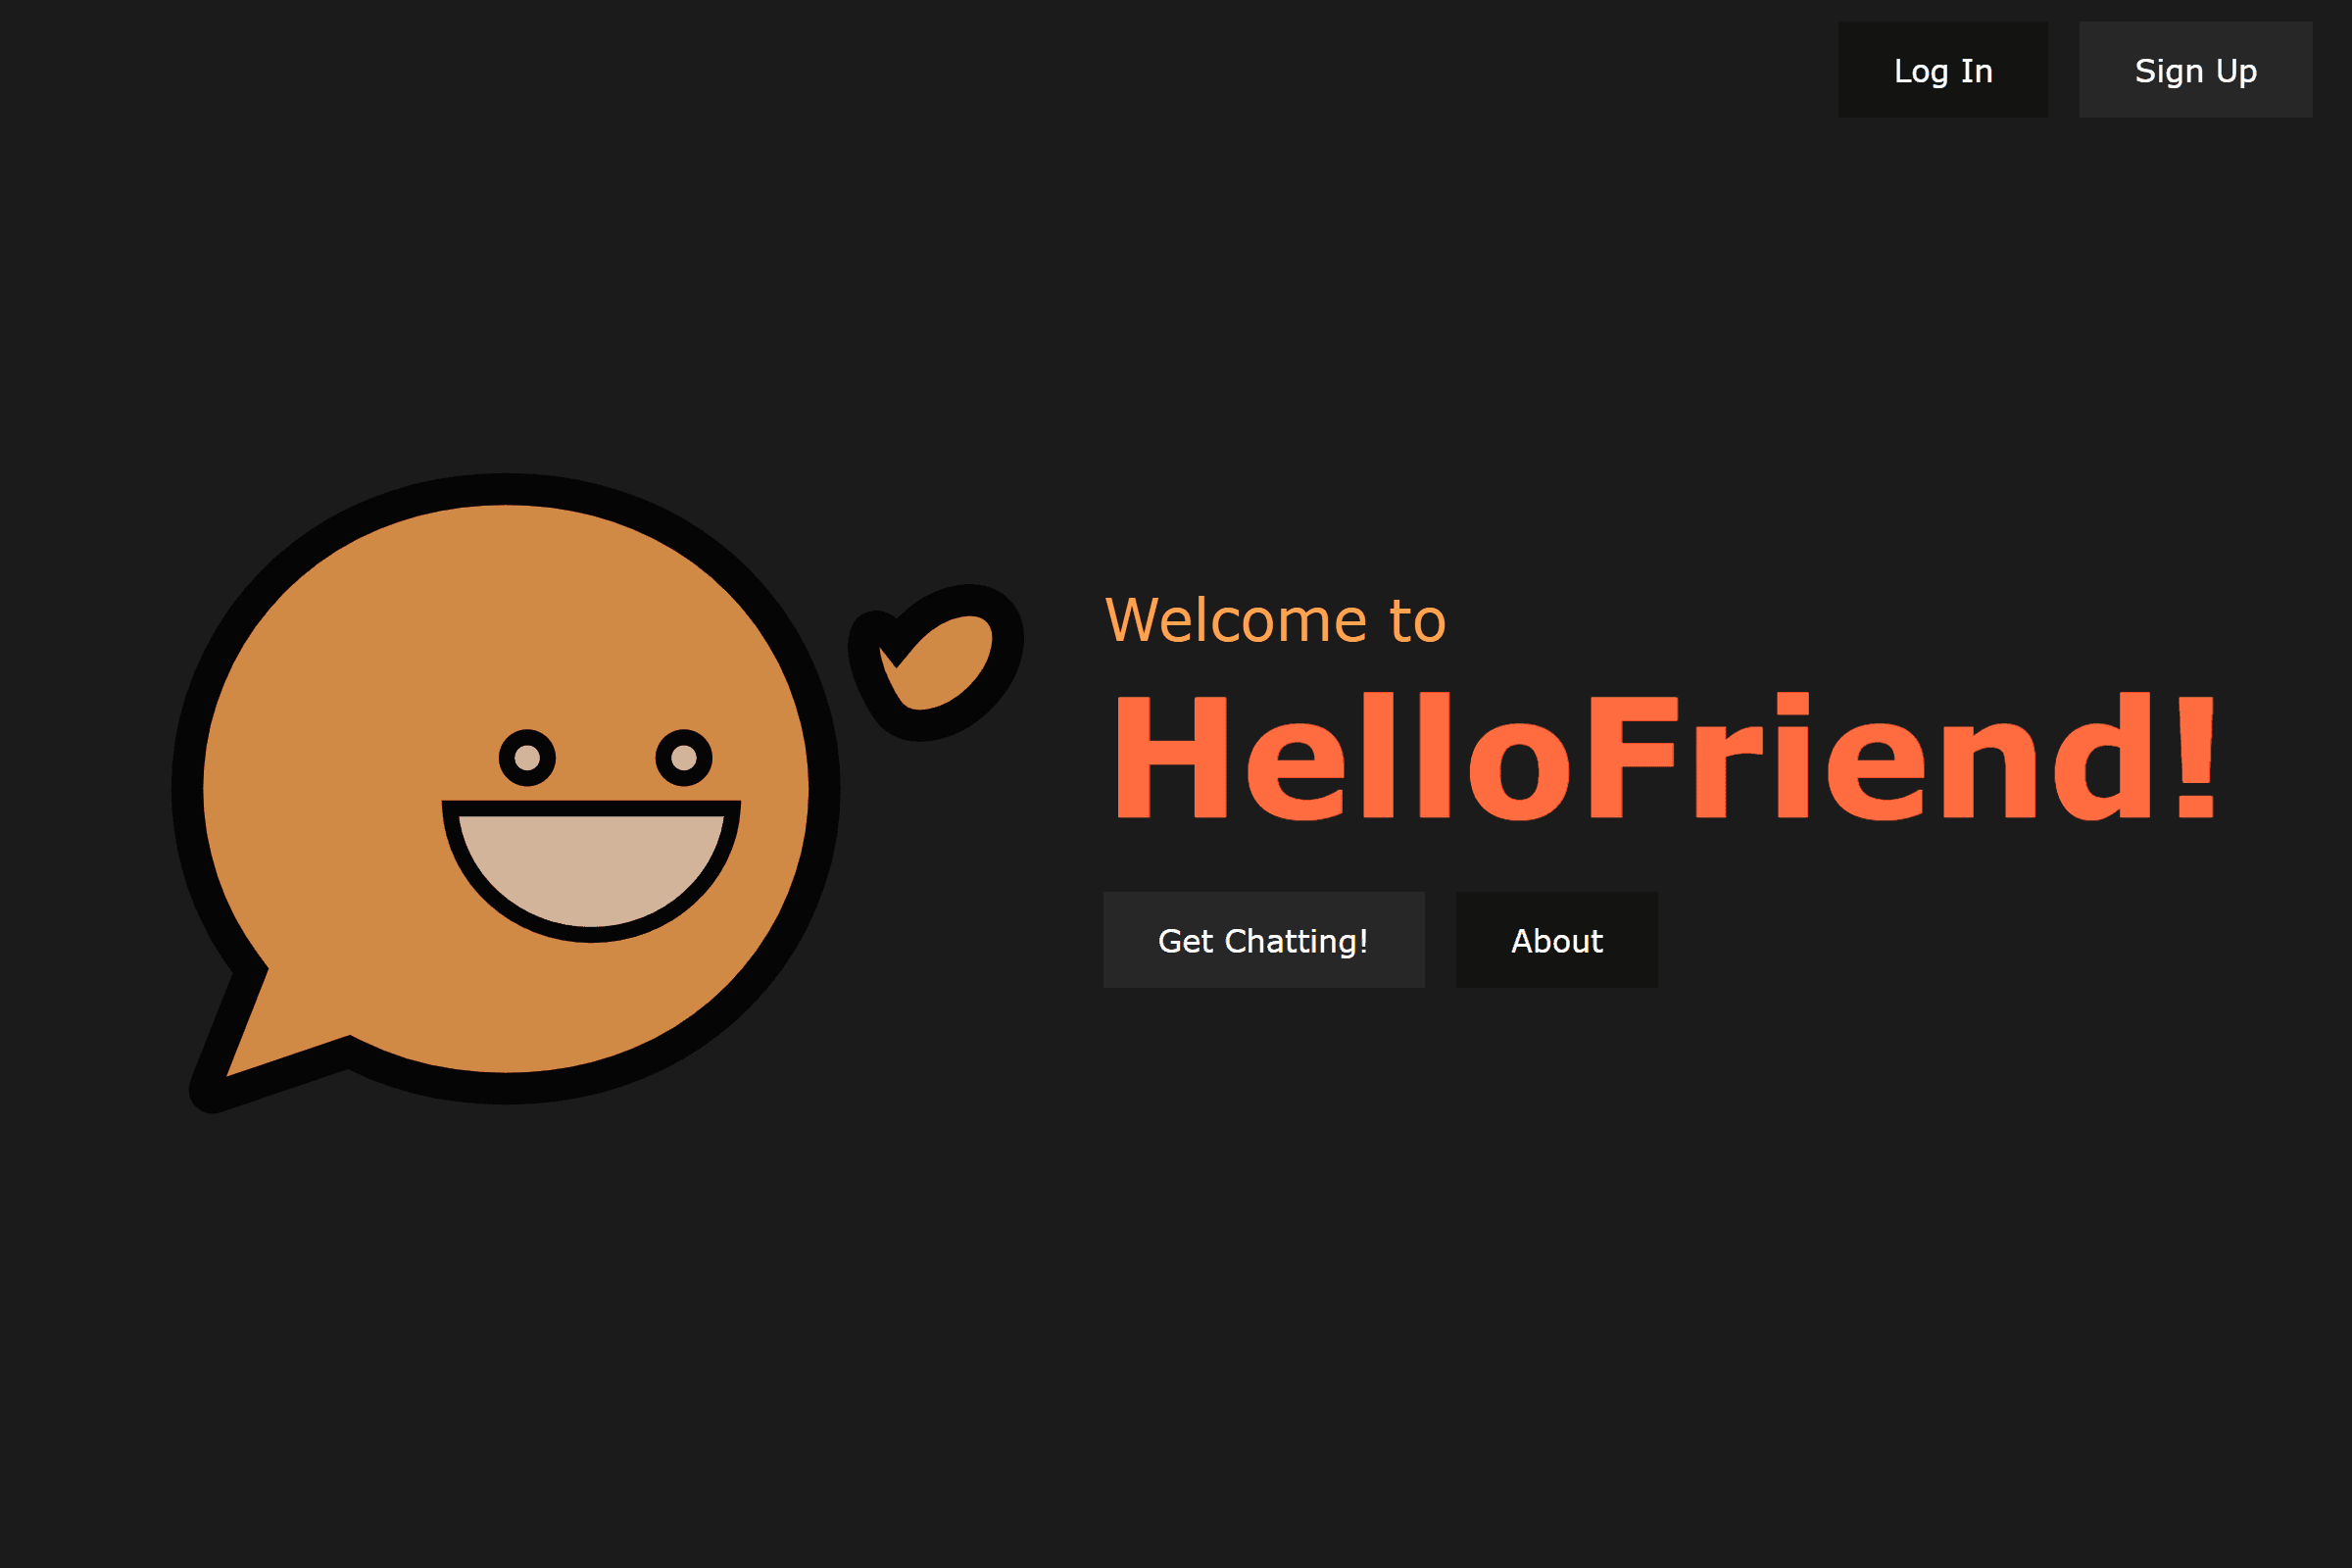 Landing page of HelloFriend!